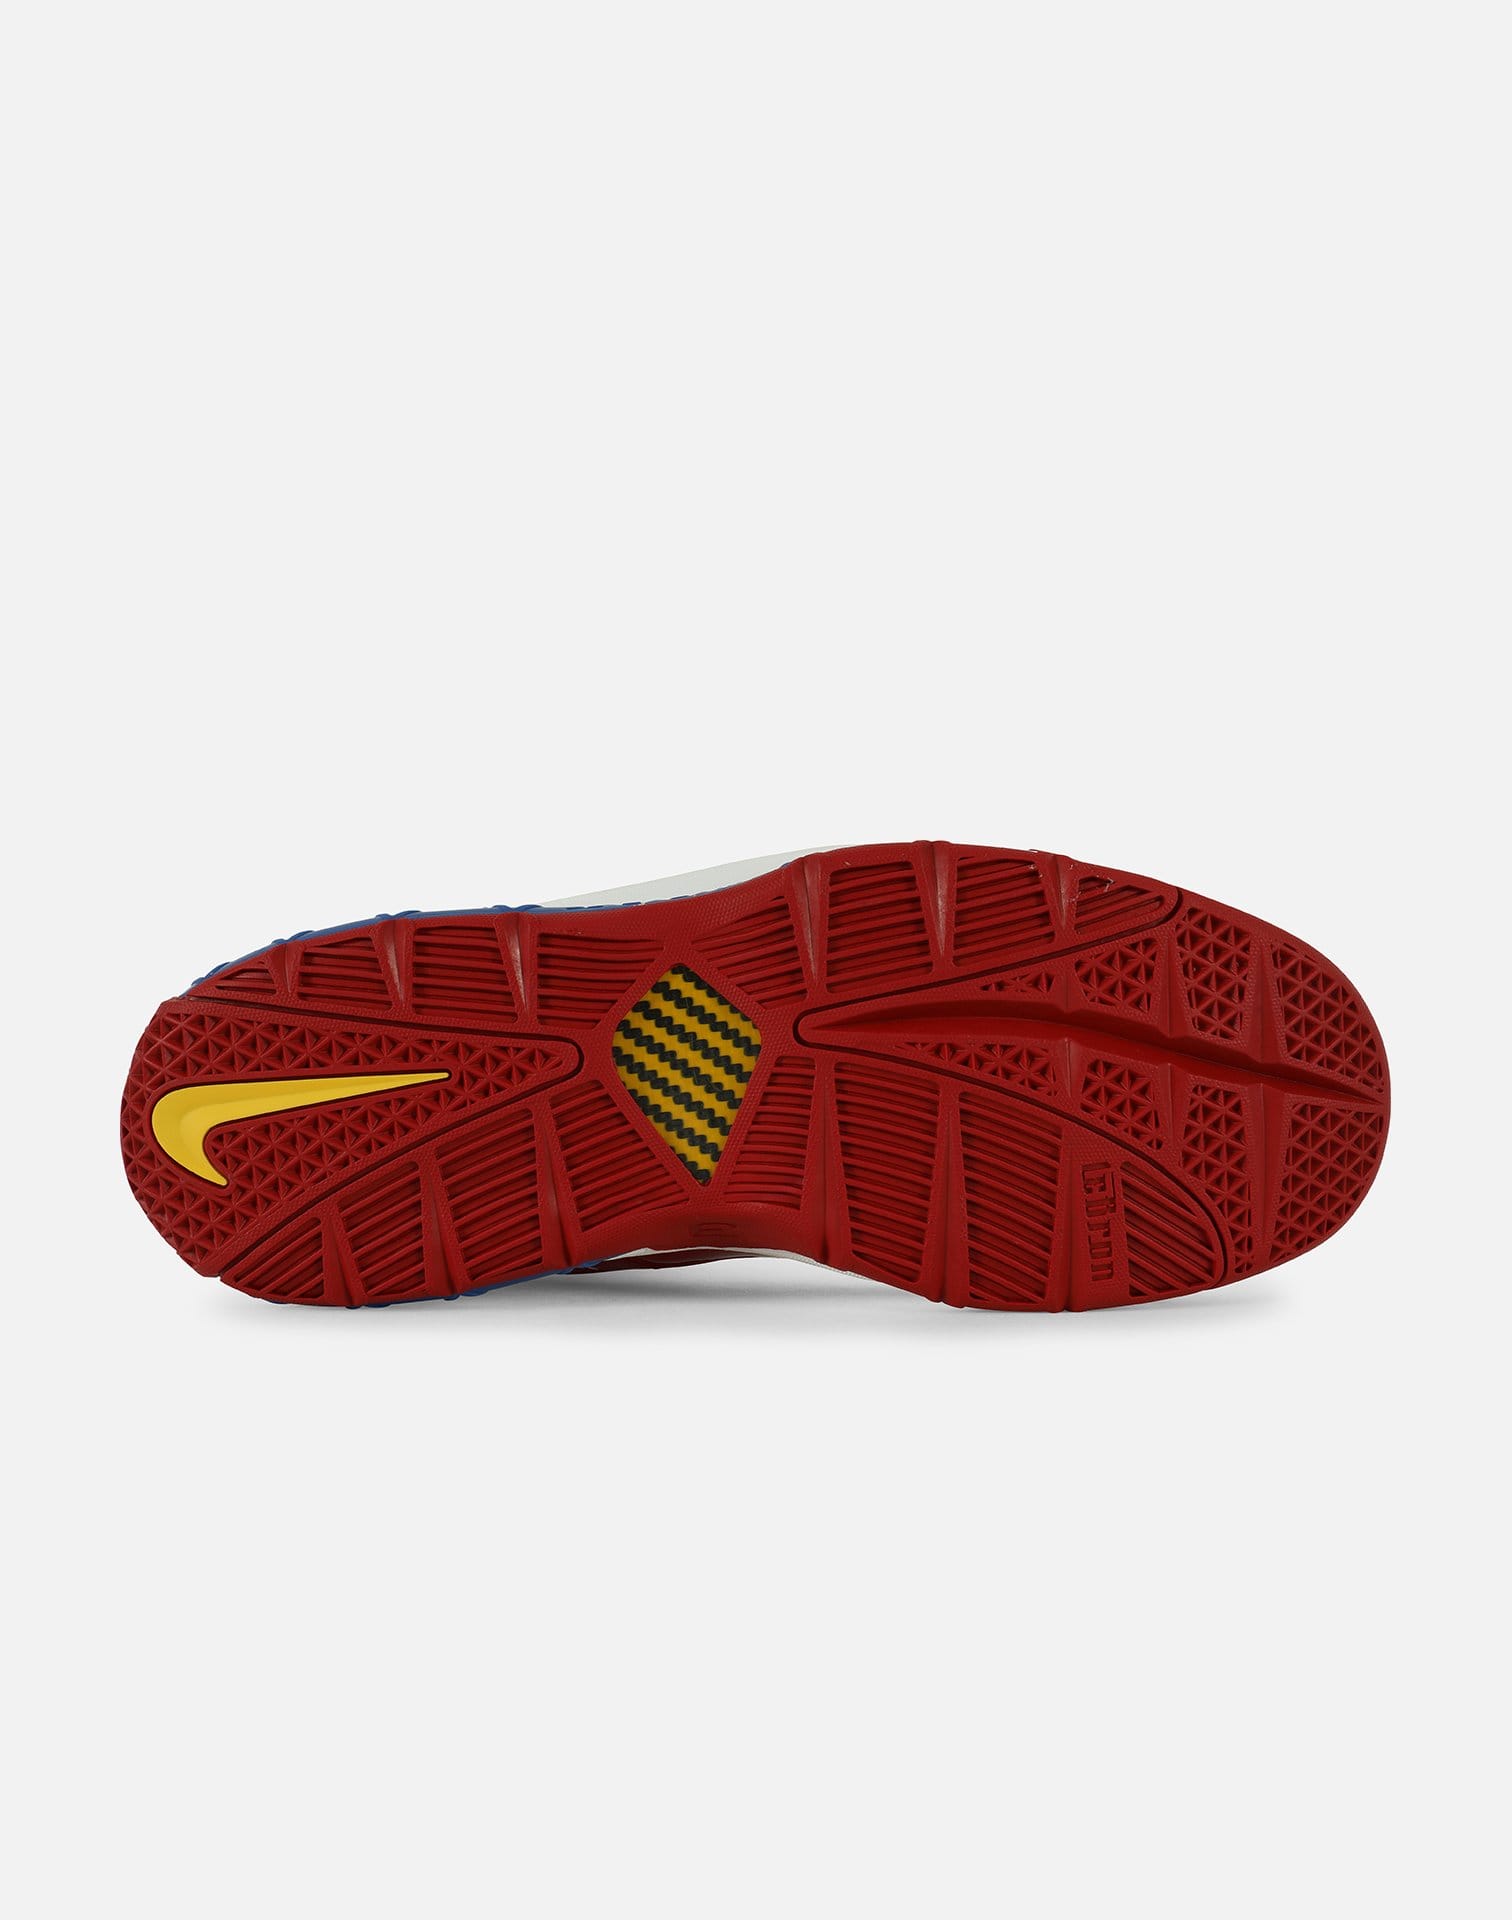 Nike Lebron 3 SB QS